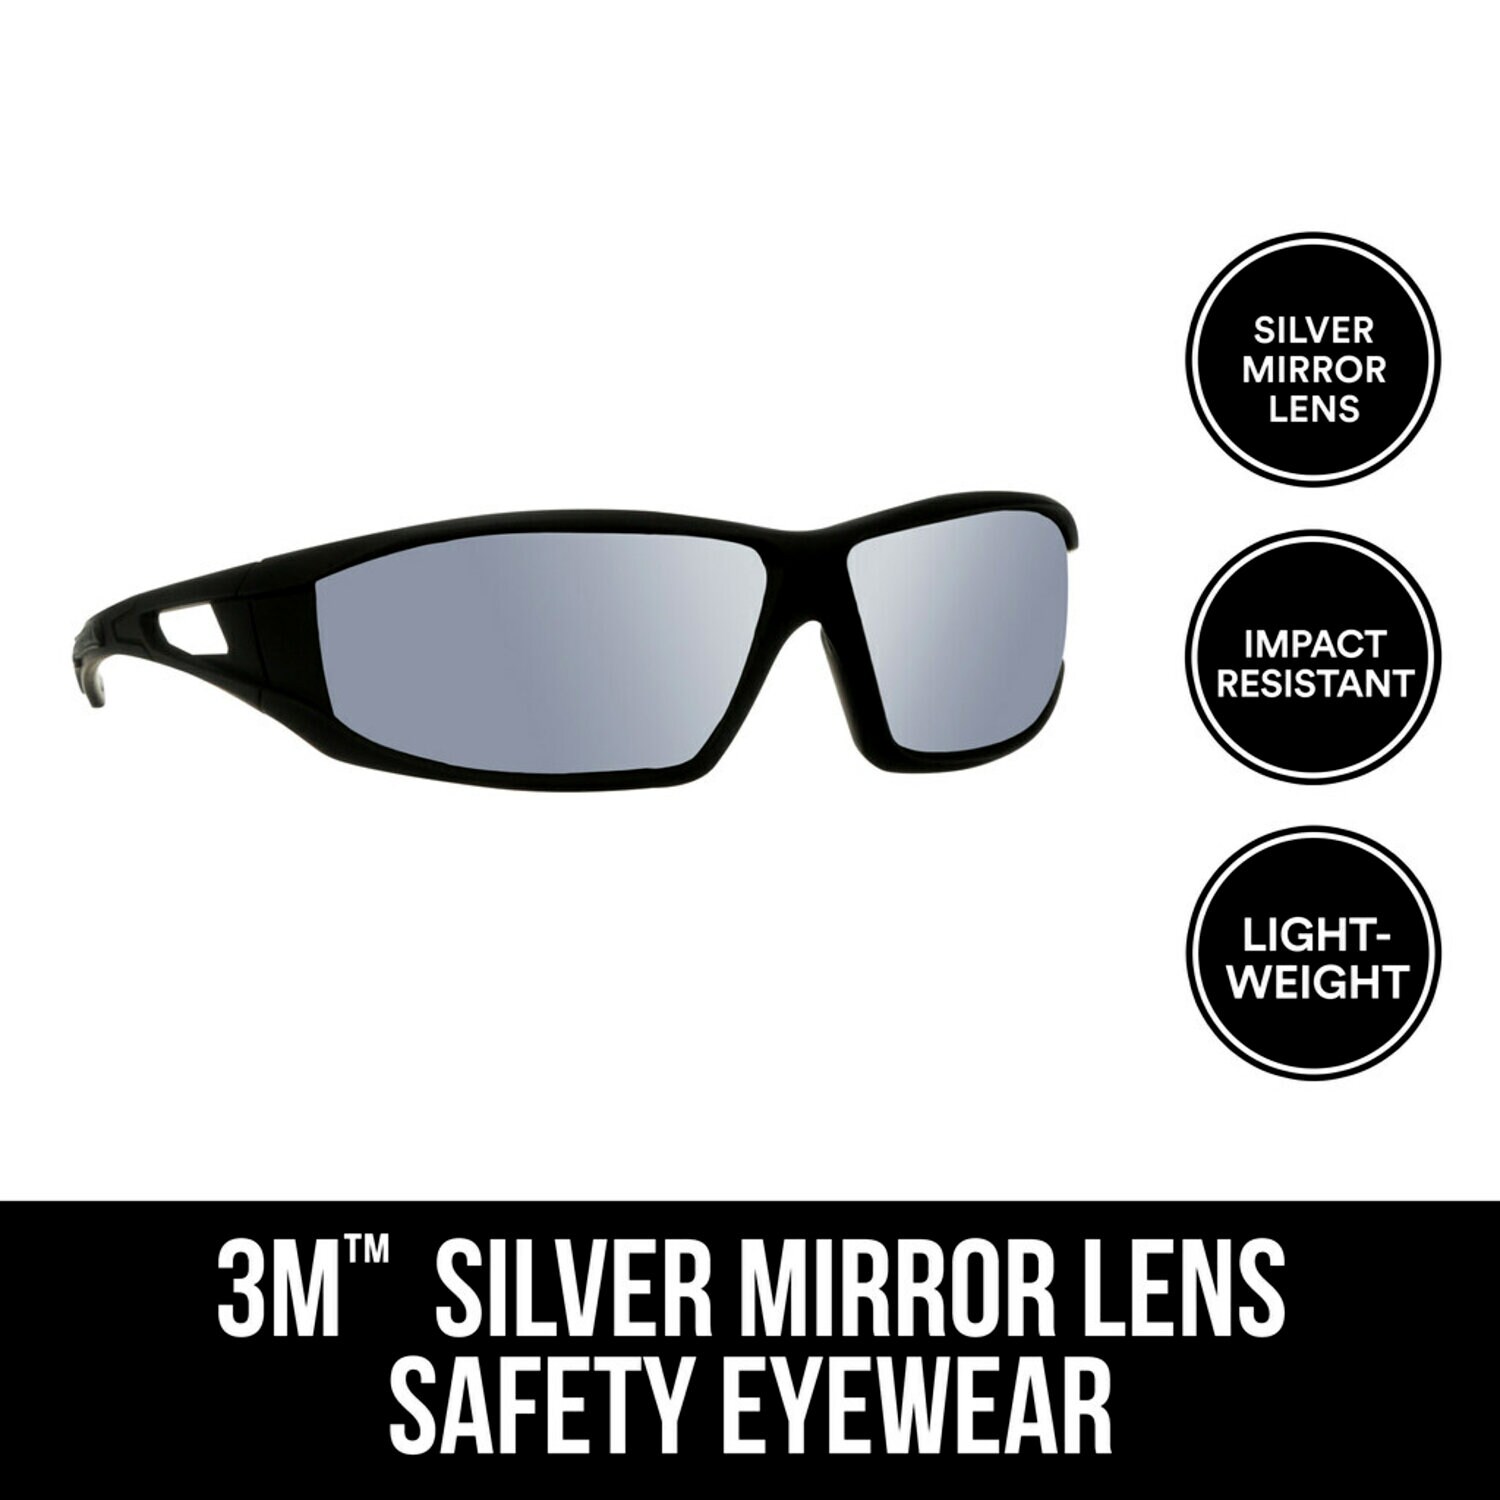 7100158602 - 3M Safety Eyewear Silver Mirror, 90213-HZ4-NA, Blk Frame Gry Accent, AF
& Scratch Resistant Lens, 4/cs